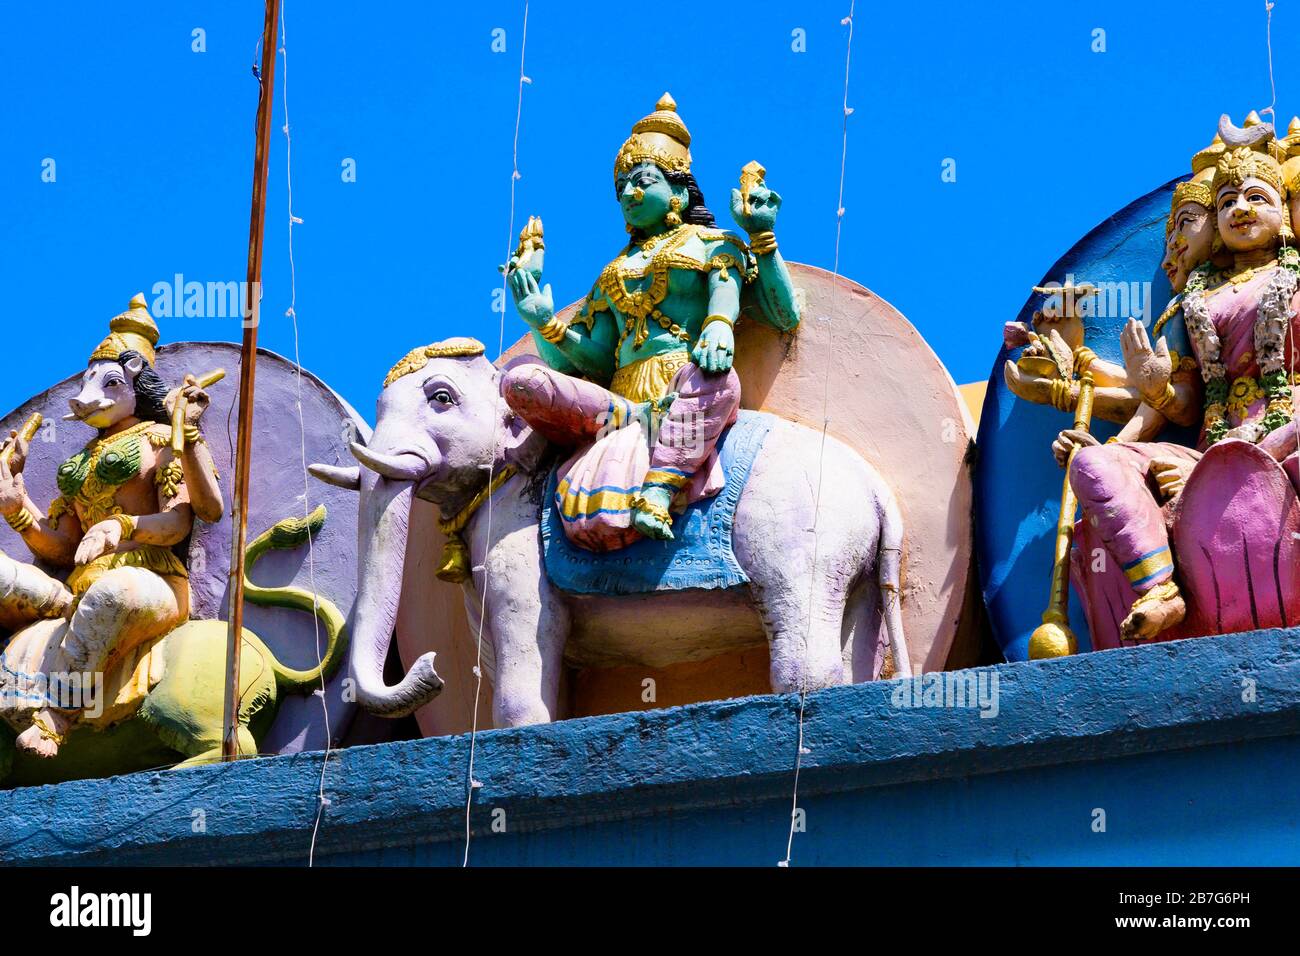 South Asia Sri Lanka Matale Sri Muthumariamman Thevasthanam Hindu Temple built 1874 ornate colourful figures elephant gods roof detail Stock Photo